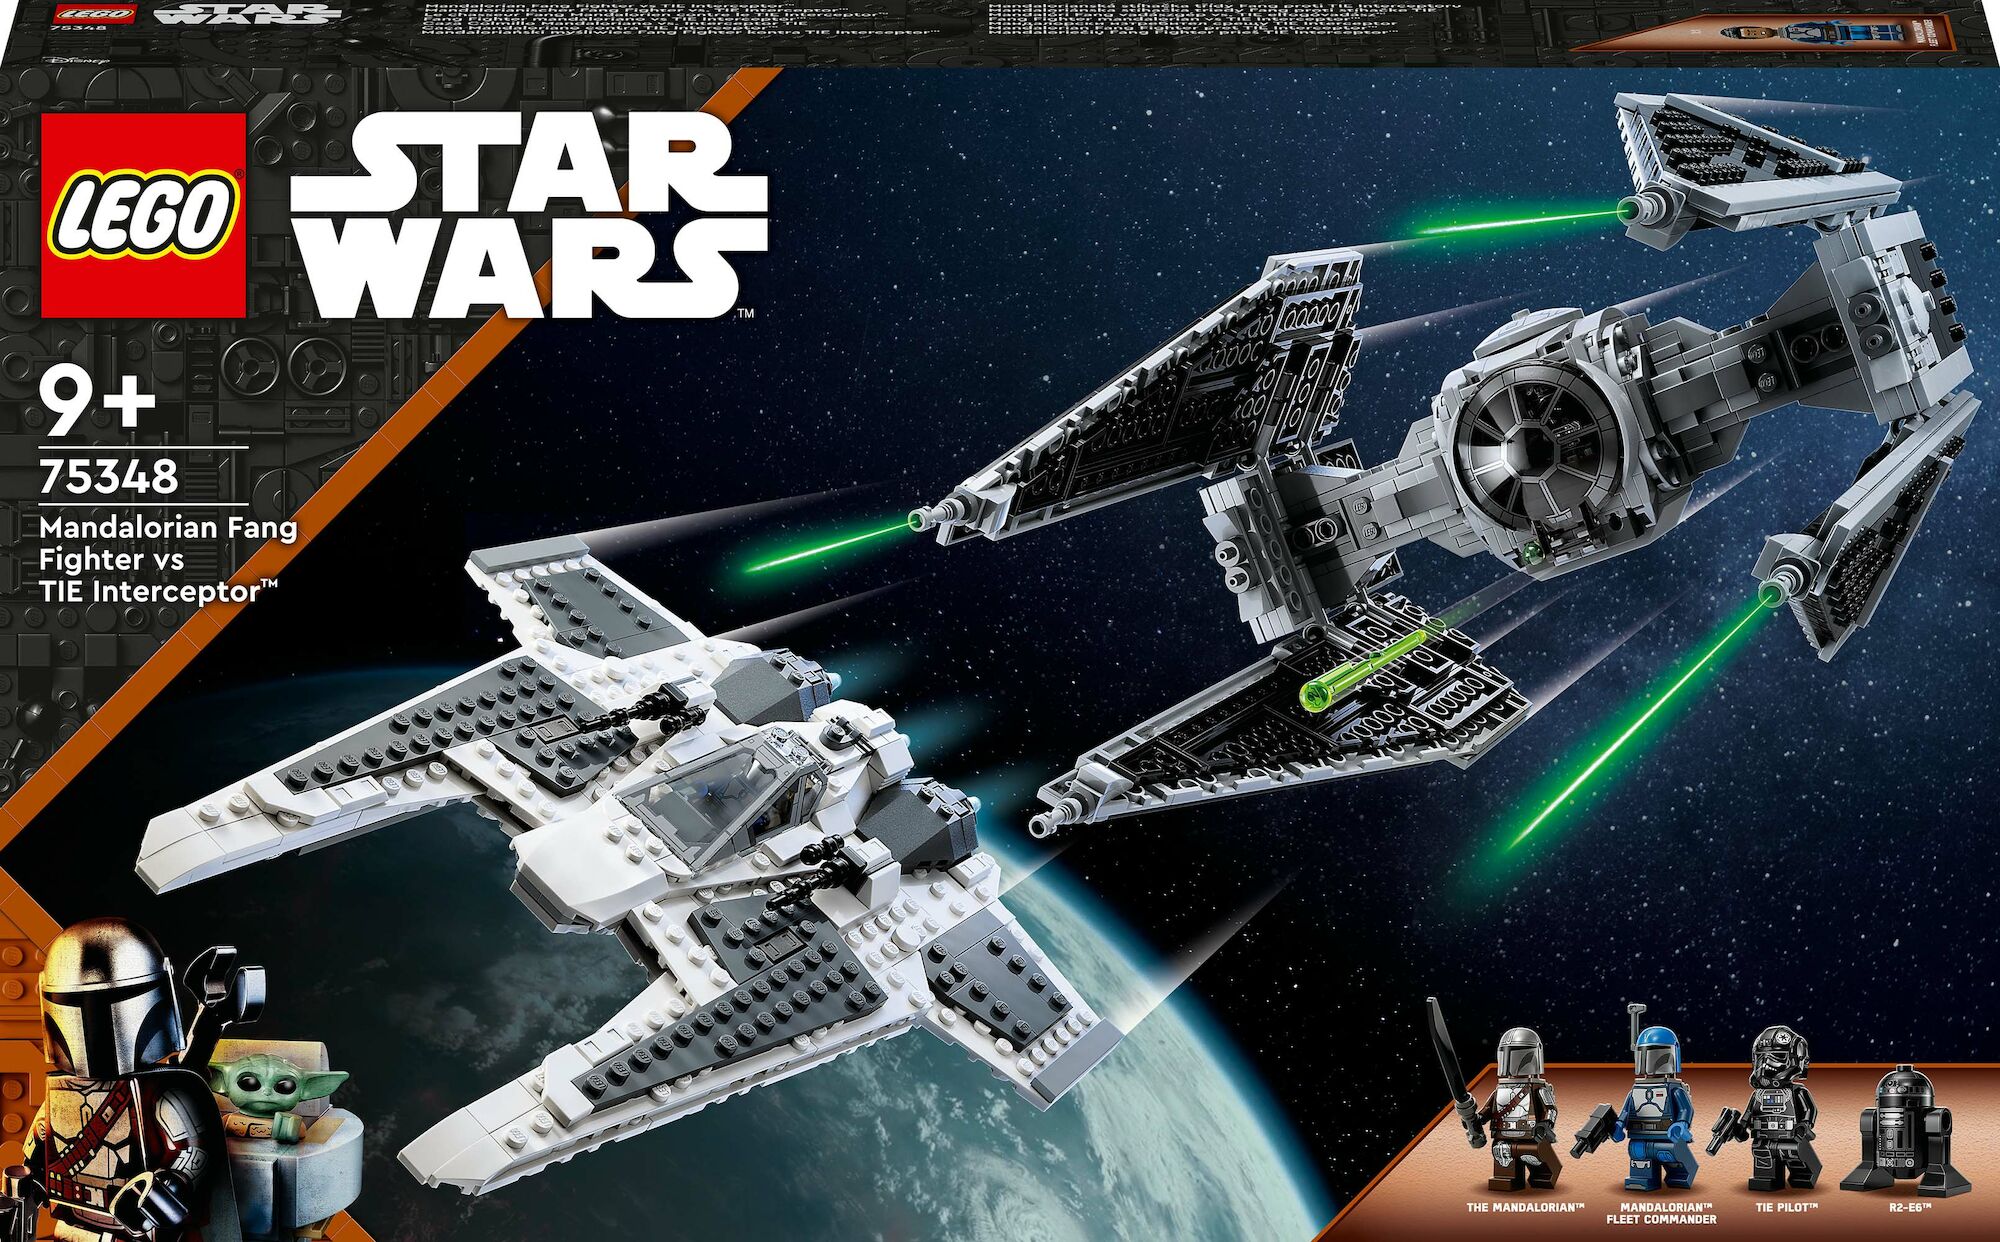 LEGO Star Wars 75348 Mandalorian Fang Fighter Vs Tie Interceptor